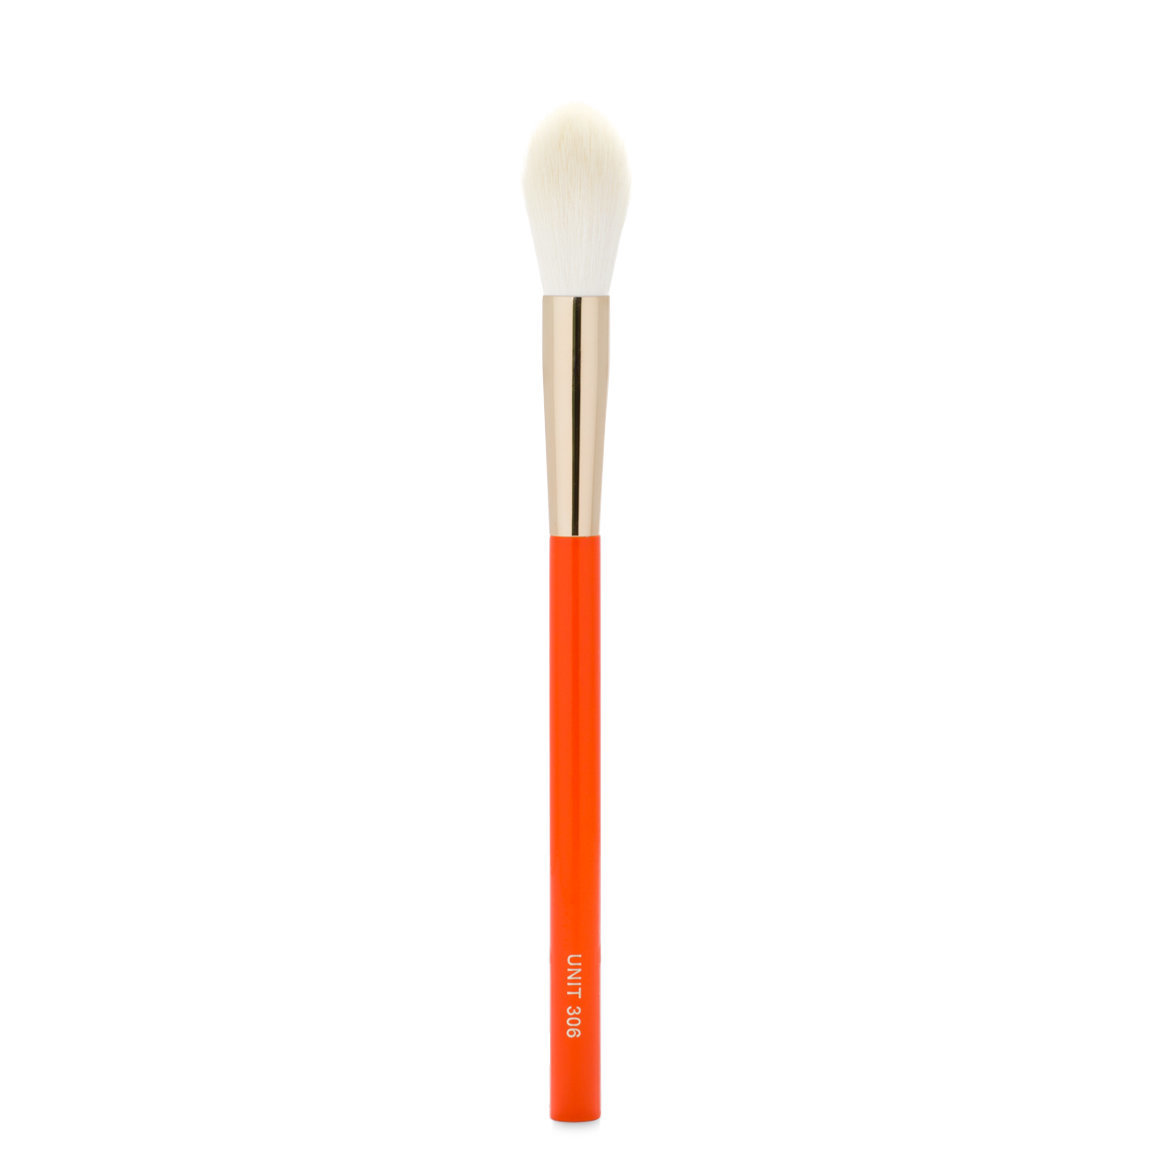 UNITS Orange Series UNIT 306 Bronzer/Blush Brush alternative view 1 - product swatch.